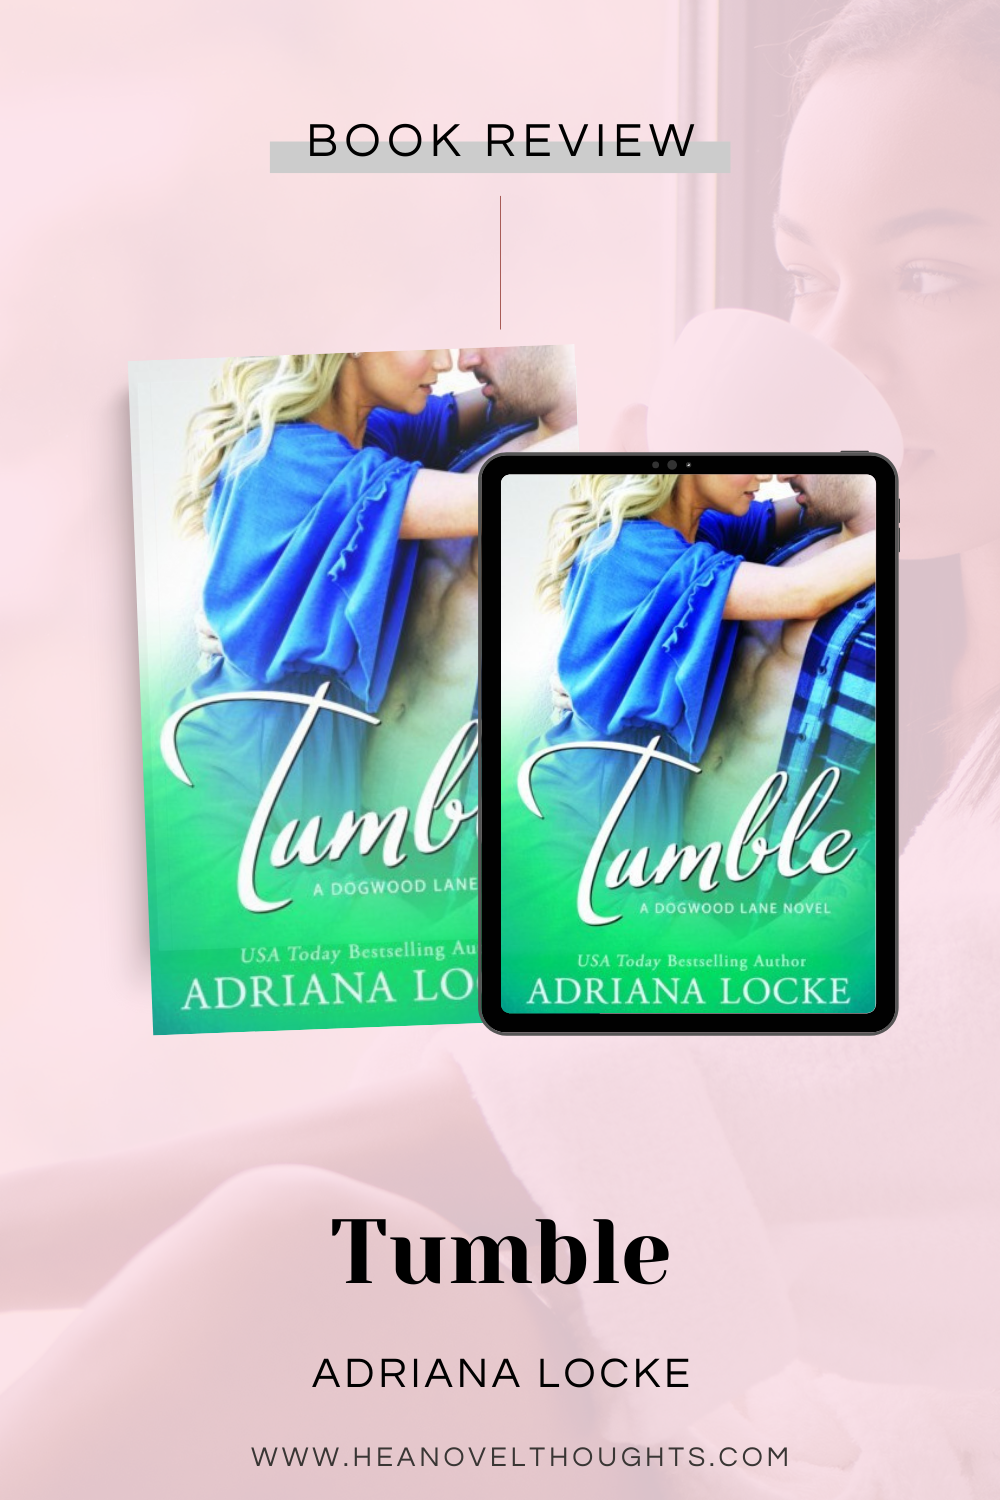 Tumble by Adriana Locke